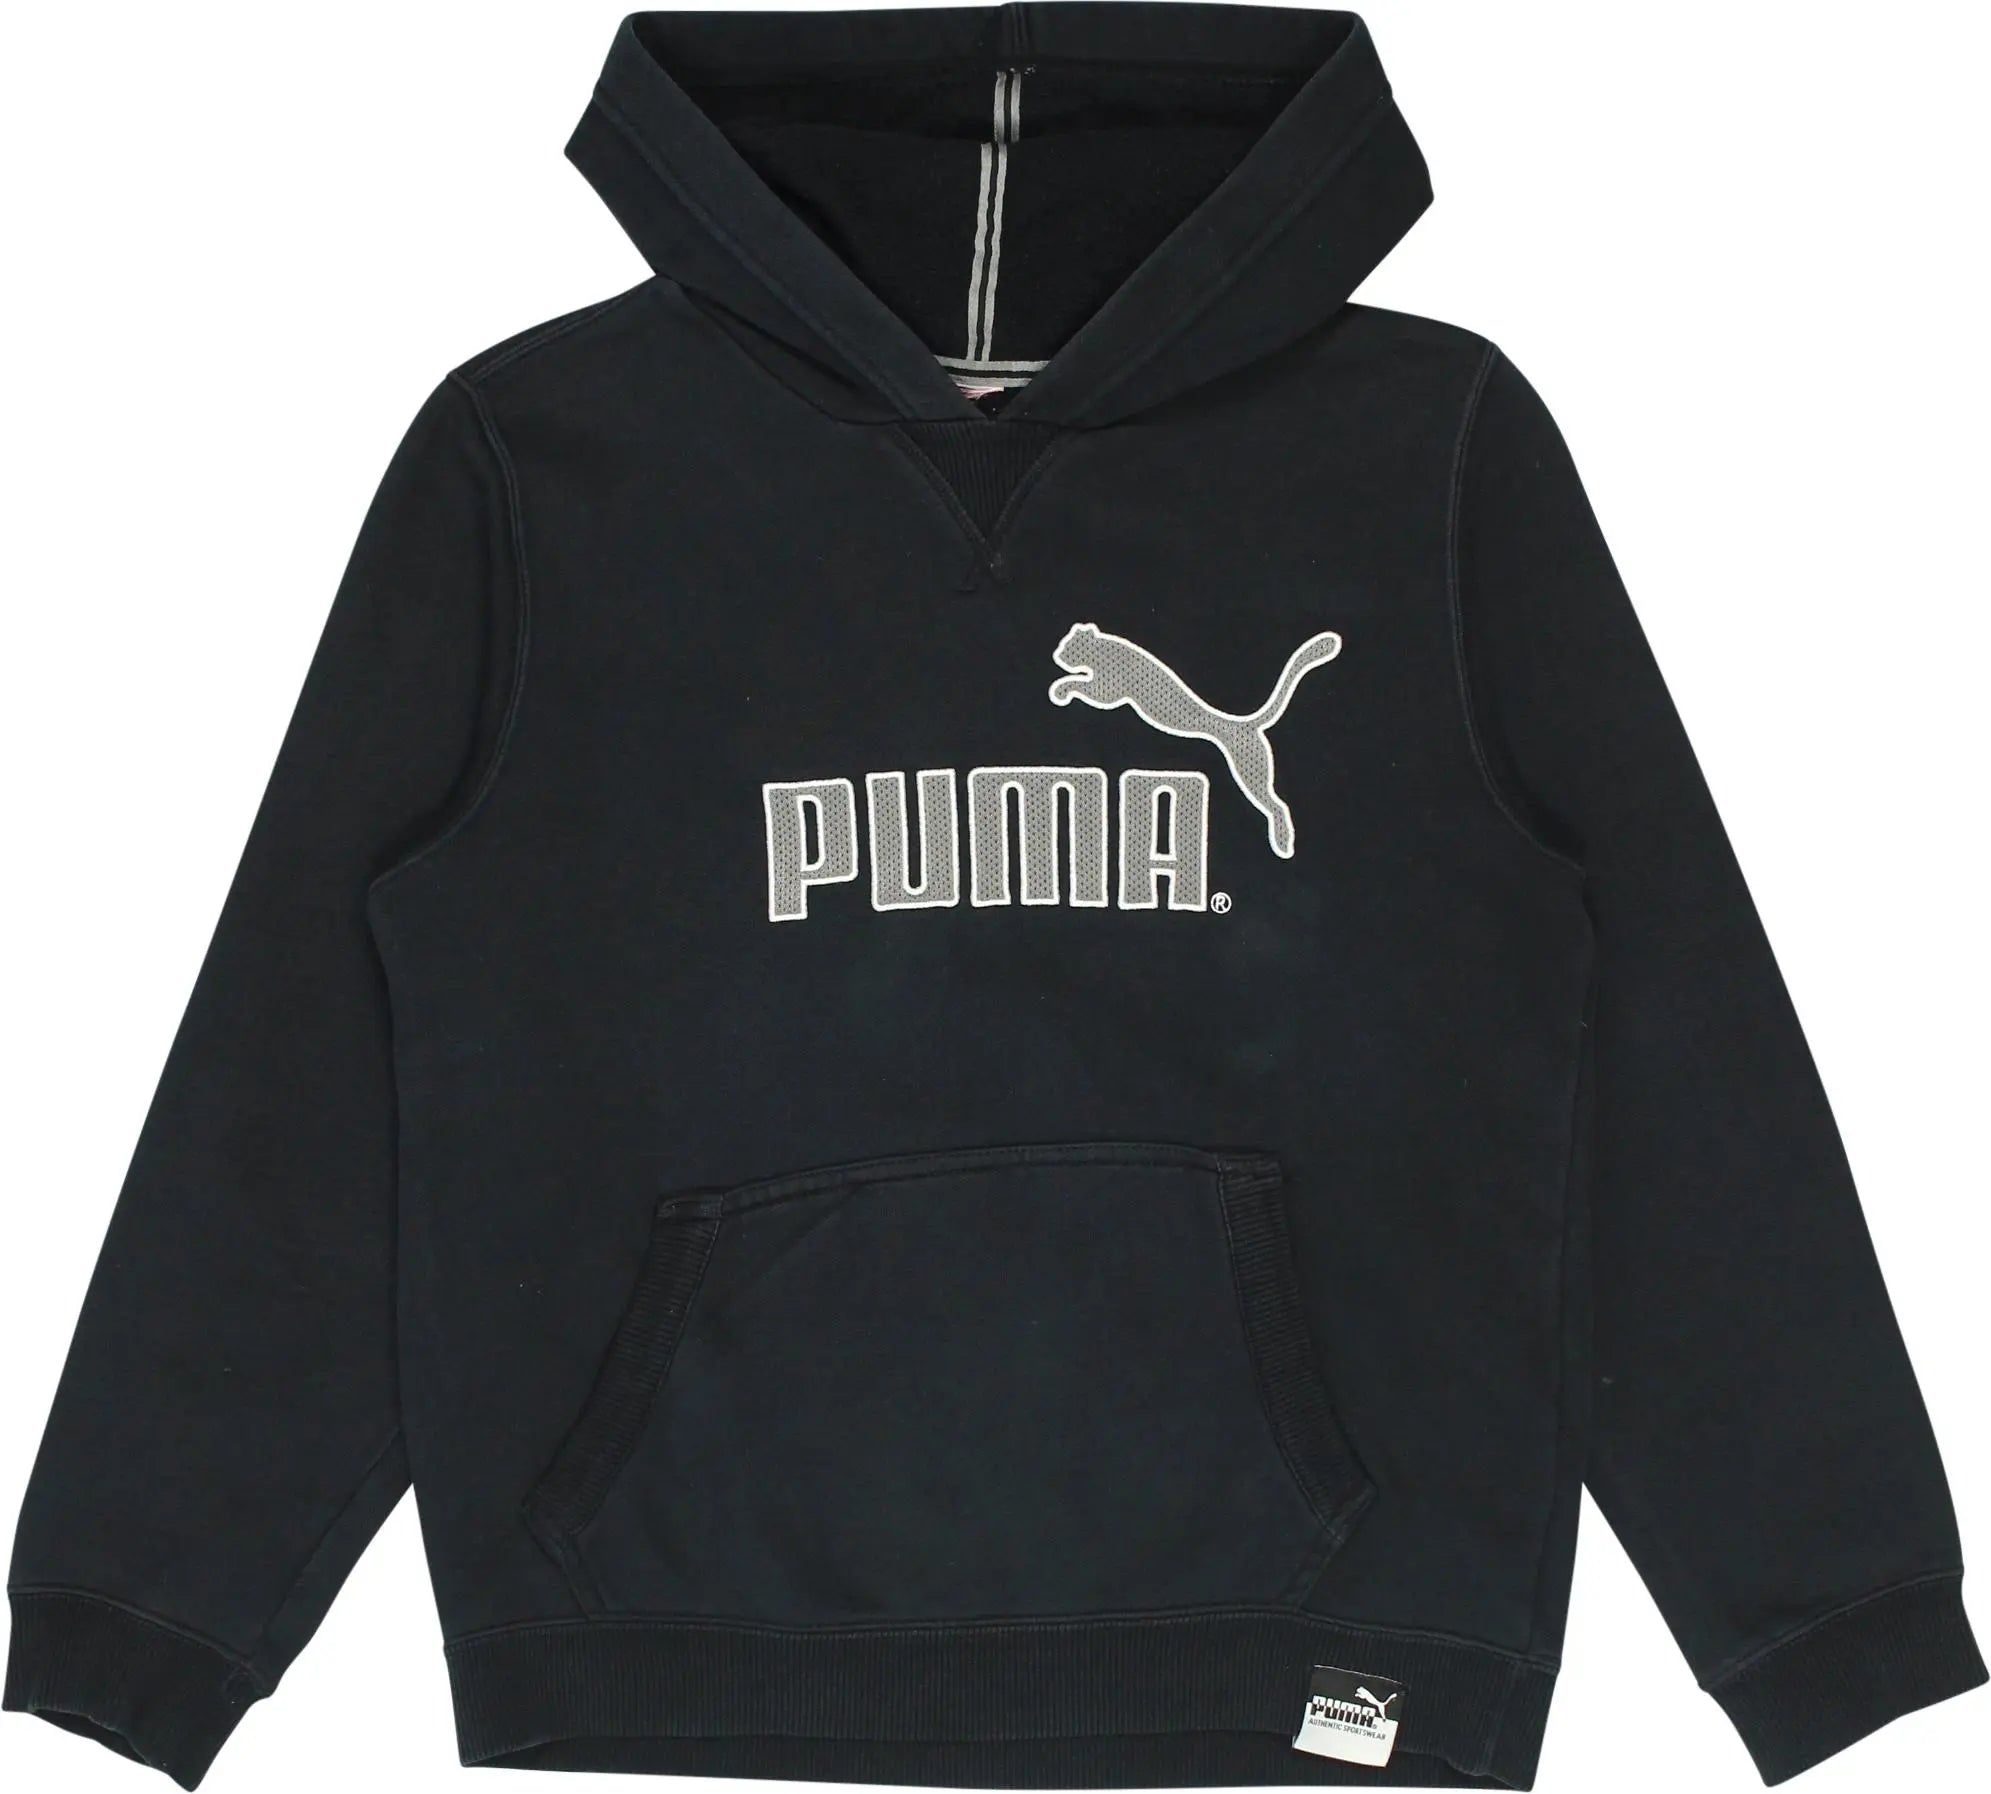 Puma - Puma Hoodie- ThriftTale.com - Vintage and second handclothing